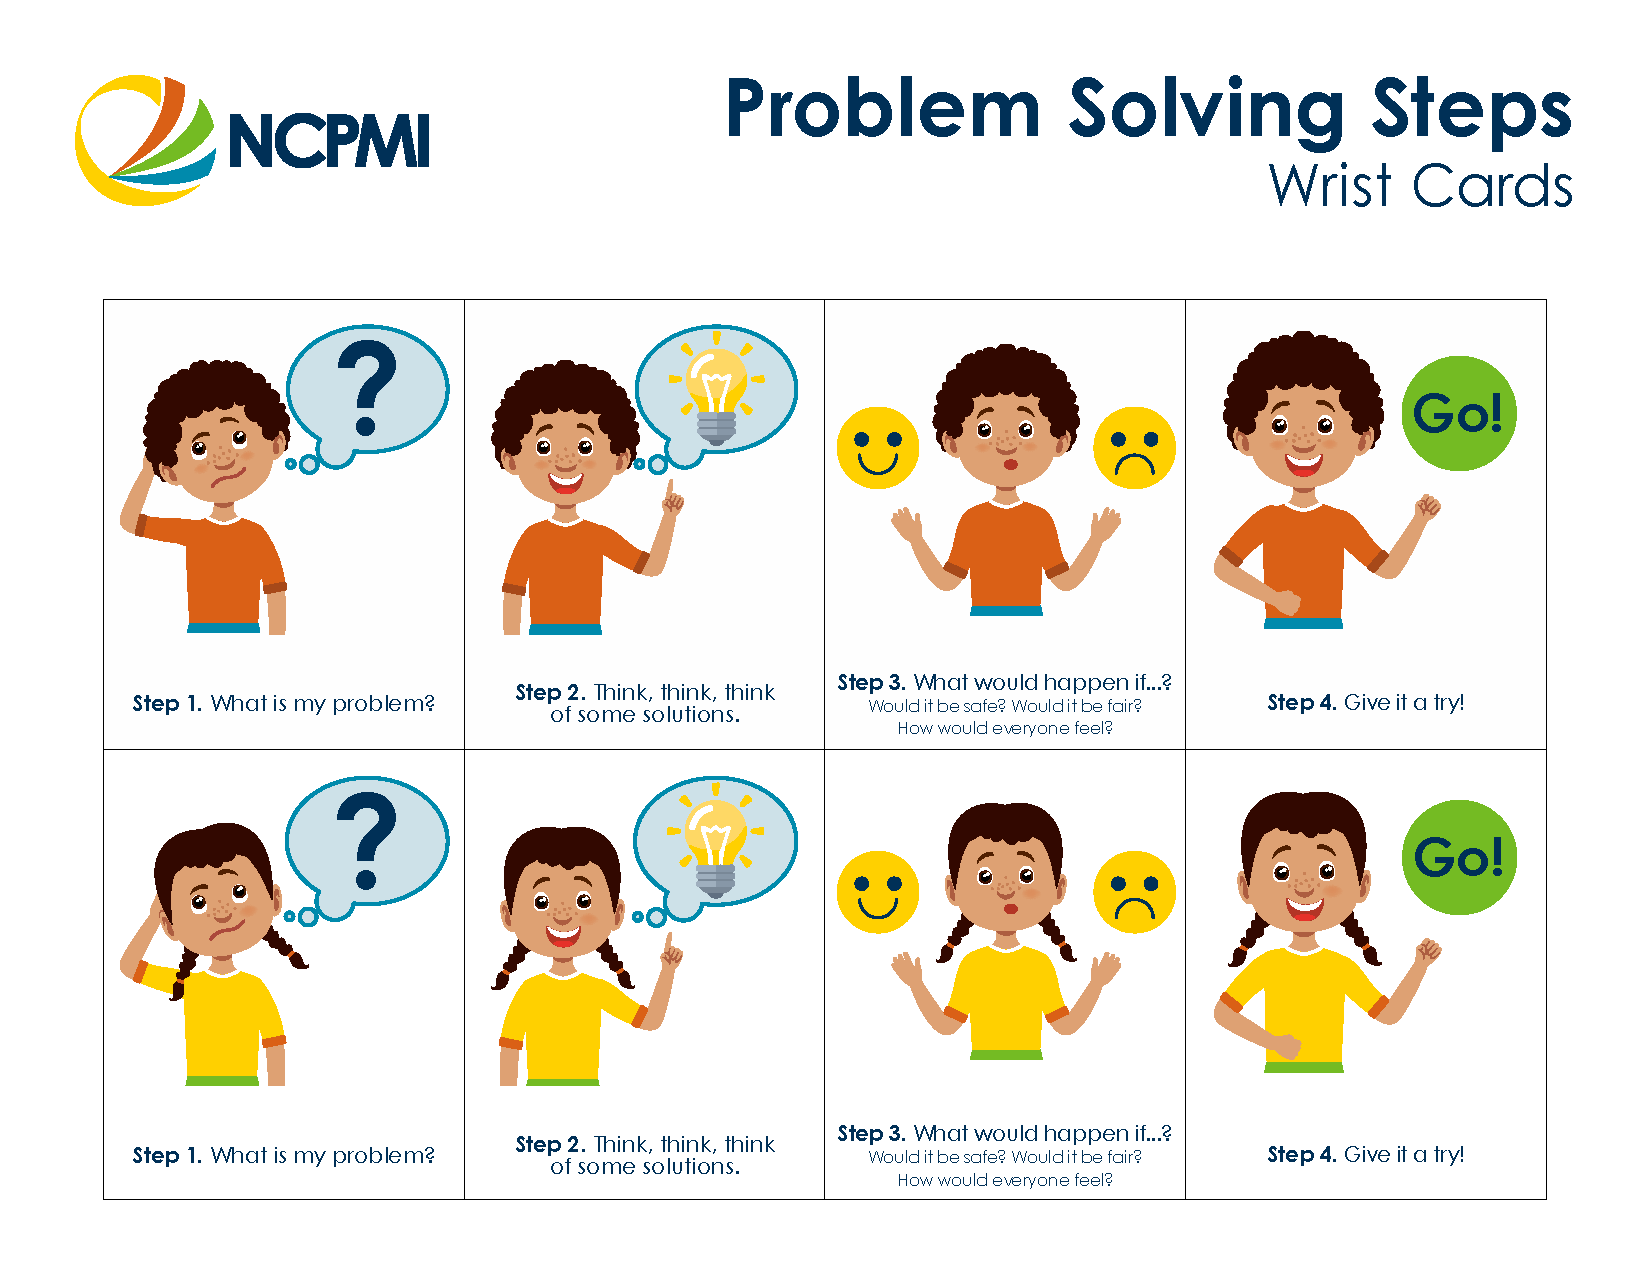 Problem-Solving Steps - Wrist Cards